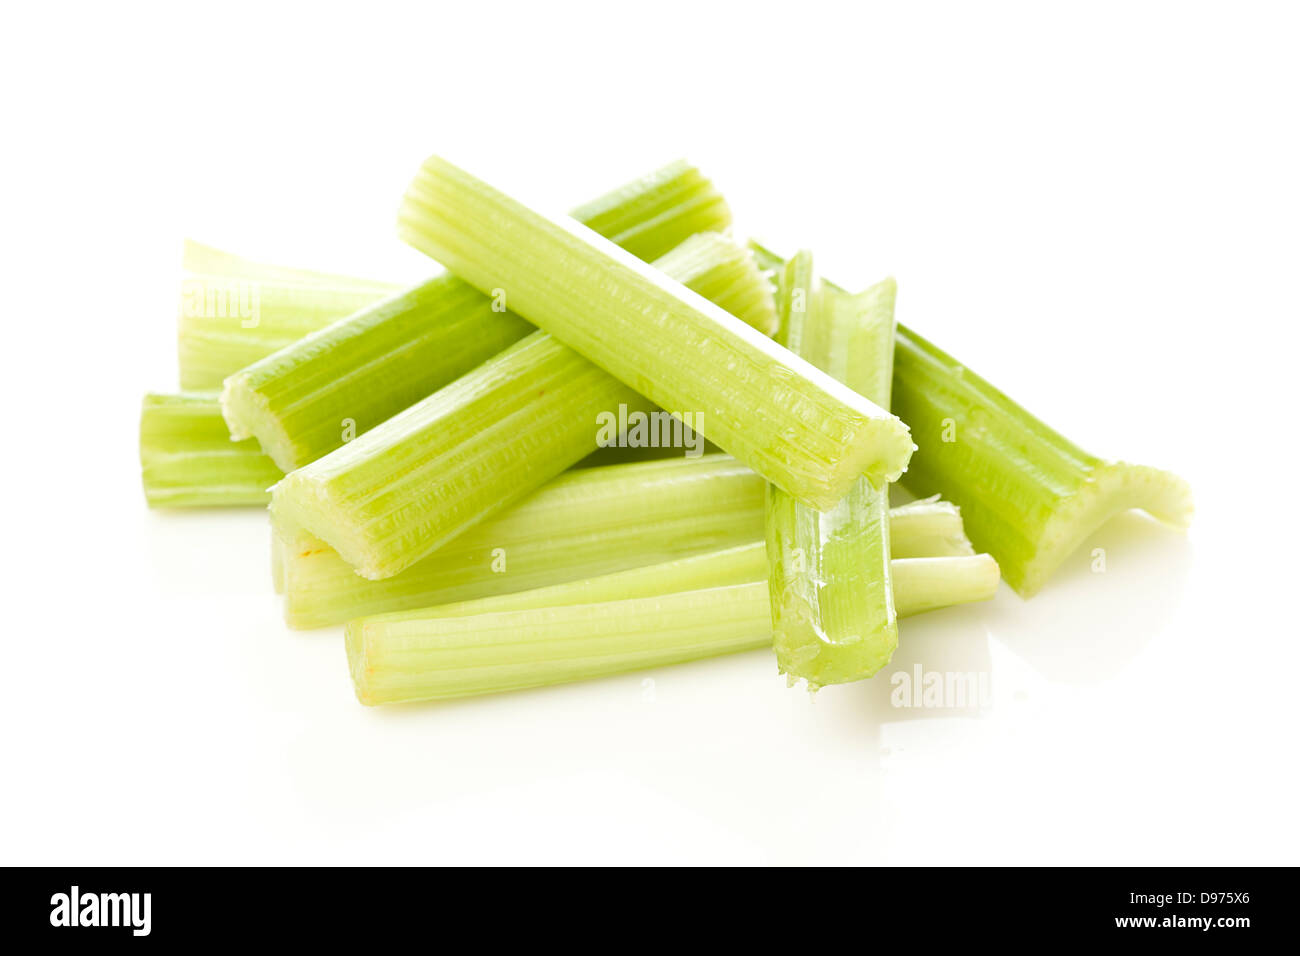 Organic Crunchy Celery on a back ground Stock Photo